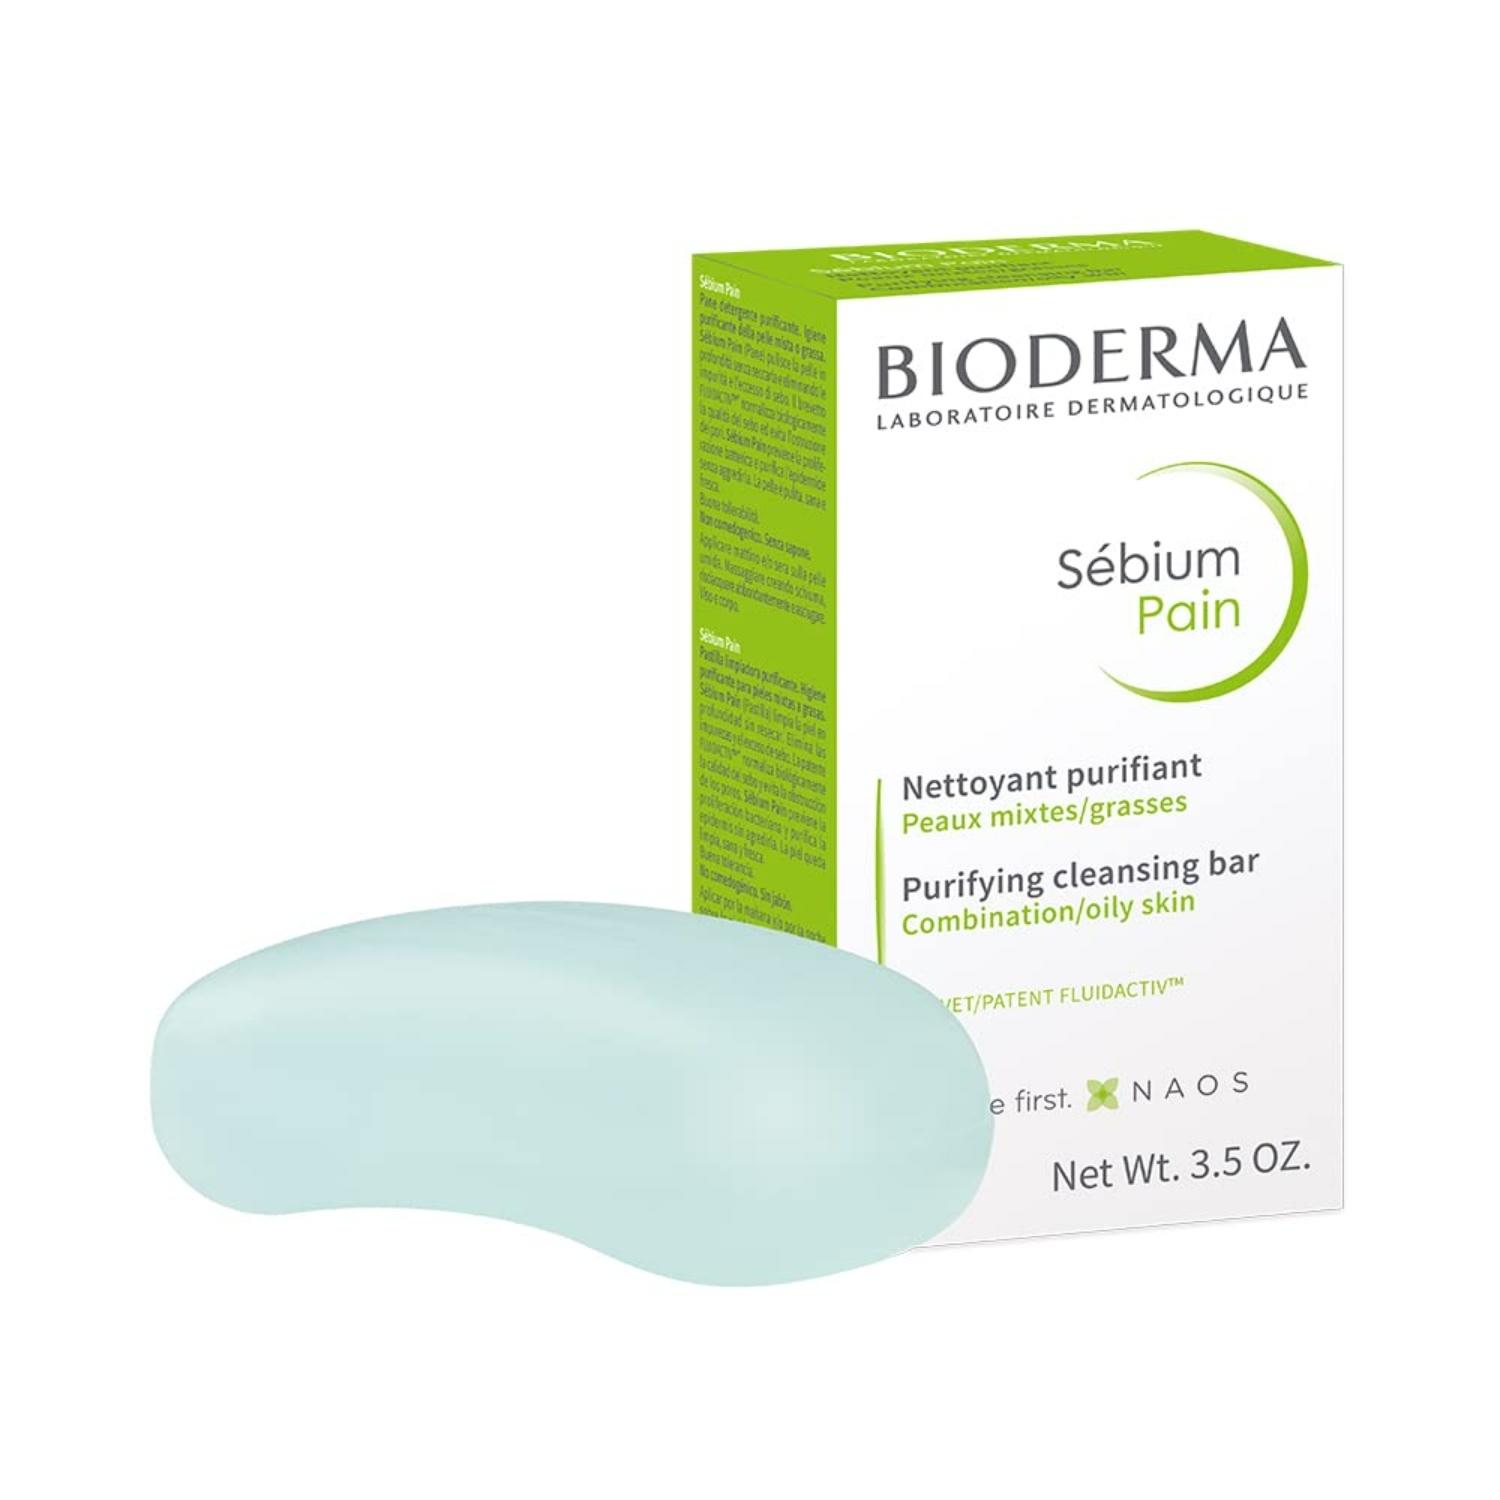 Bioderma | Bioderma Sebium Pain Purifying Cleansing Bar (100g)